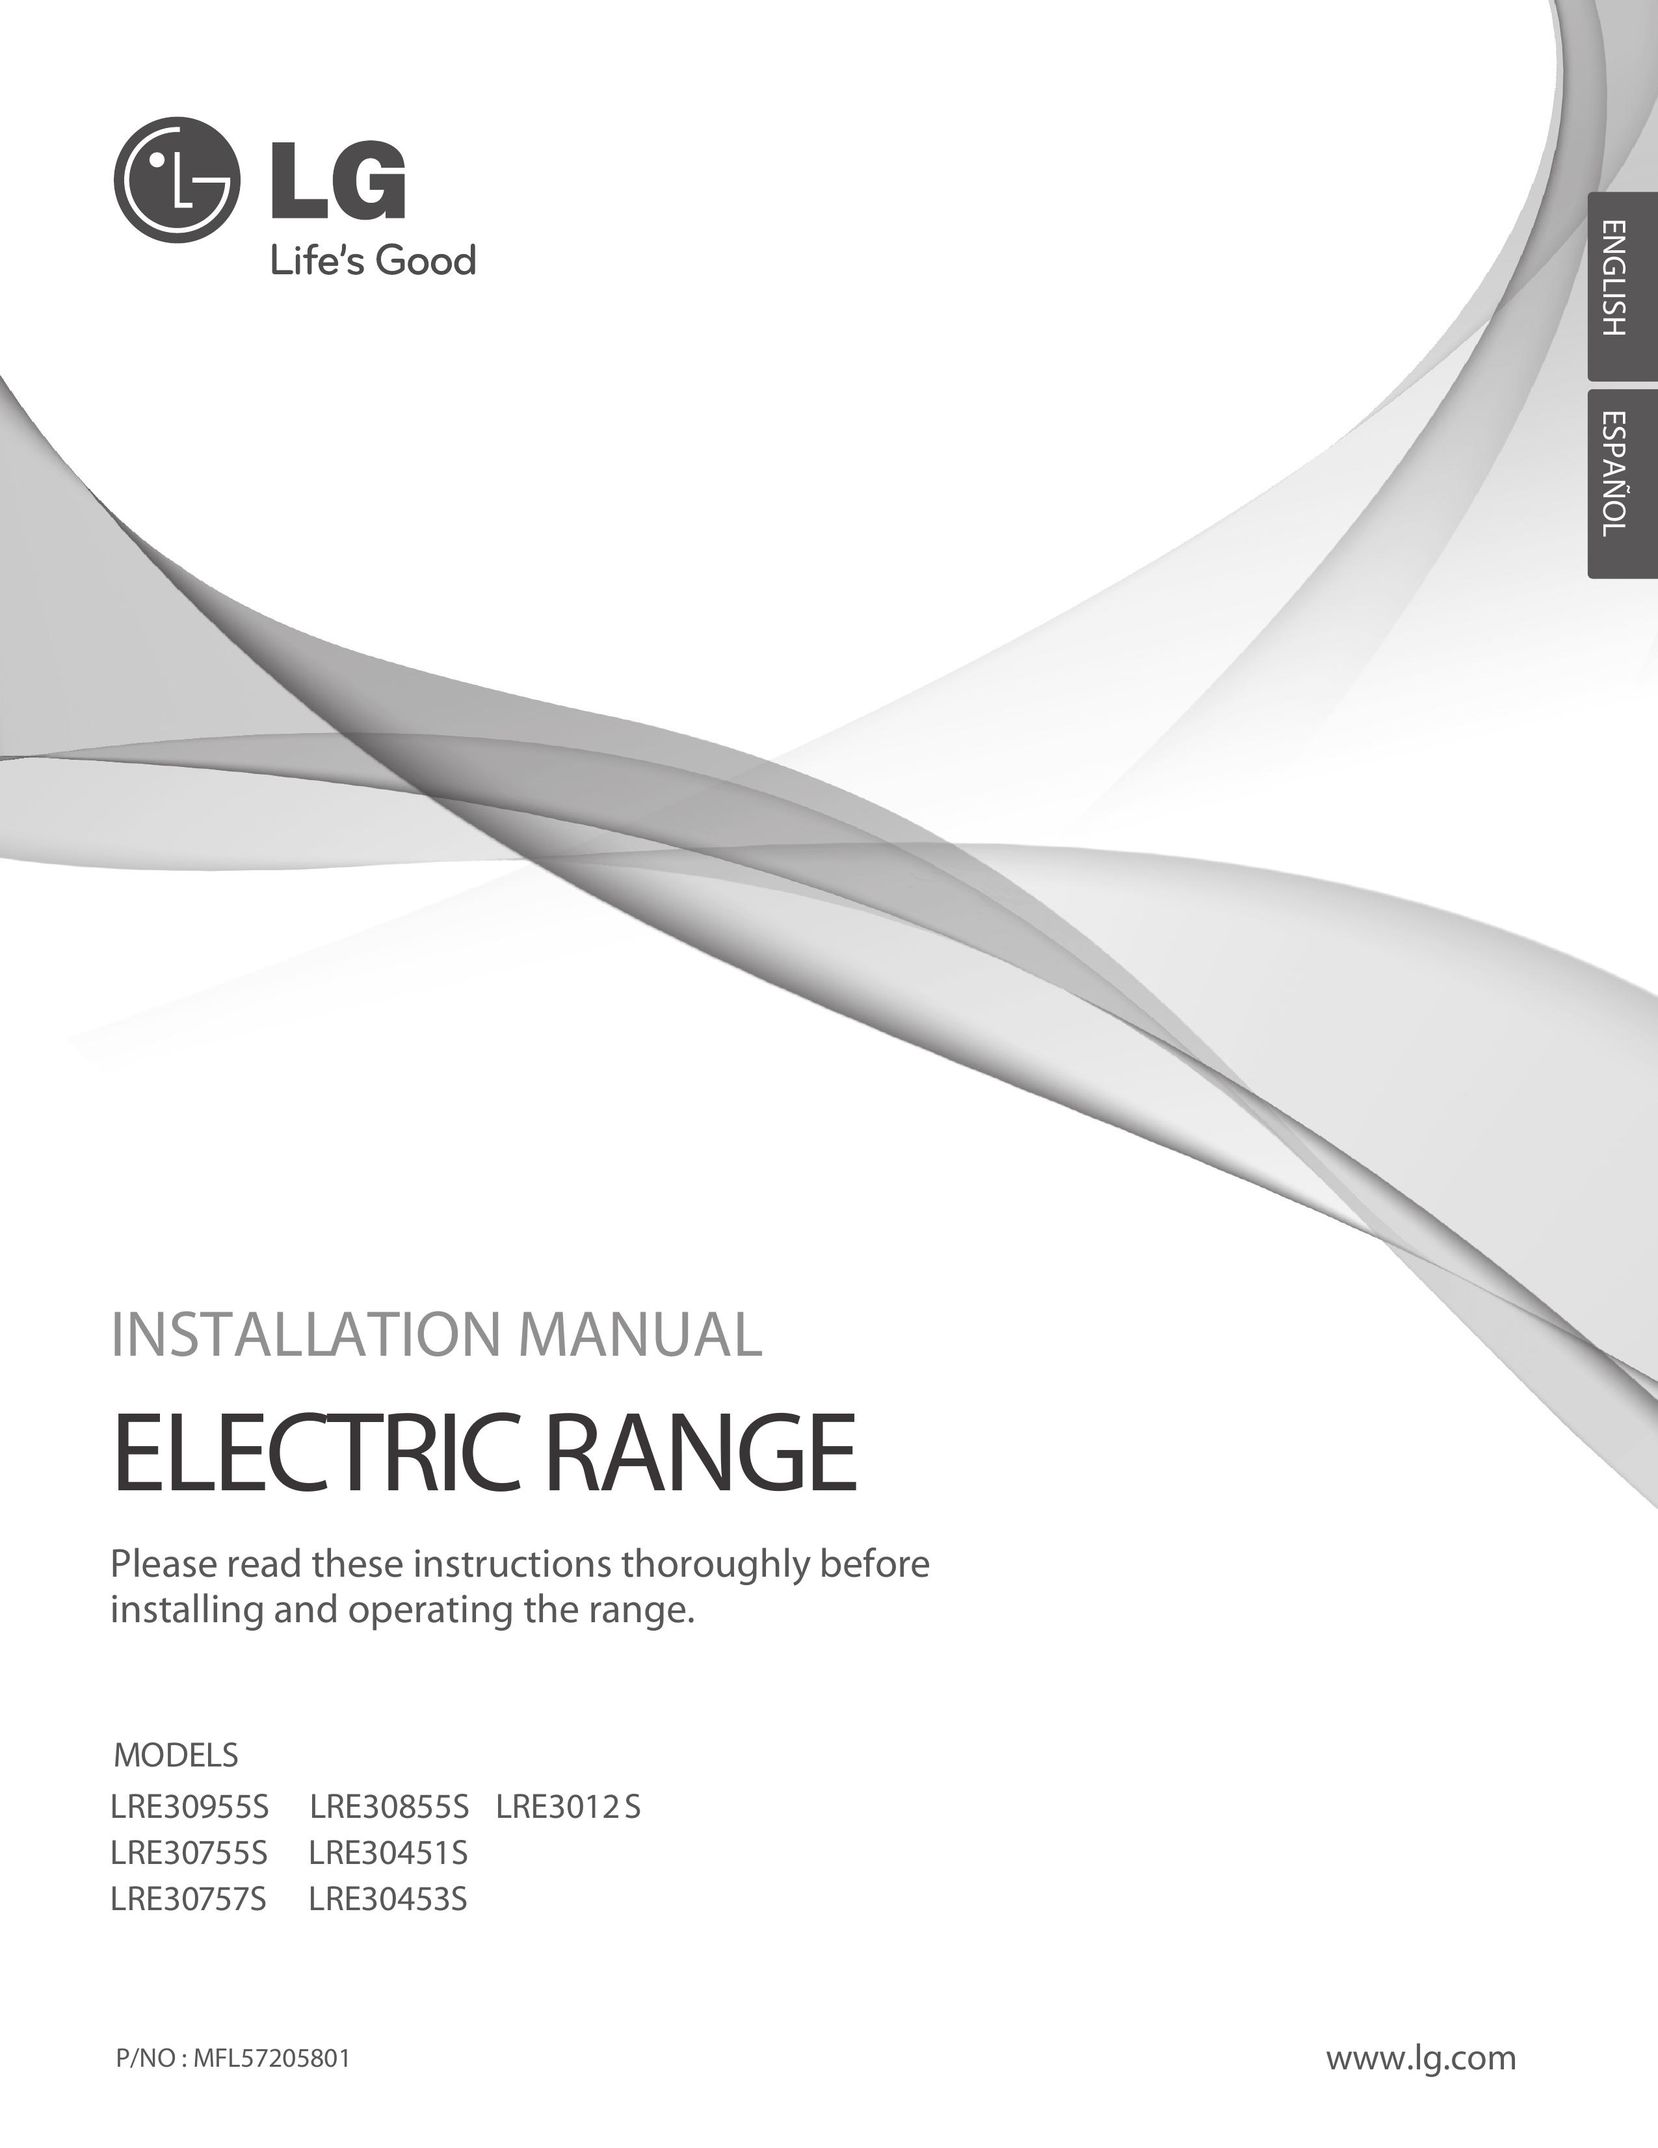 LG Electronics LRE3012S Range User Manual